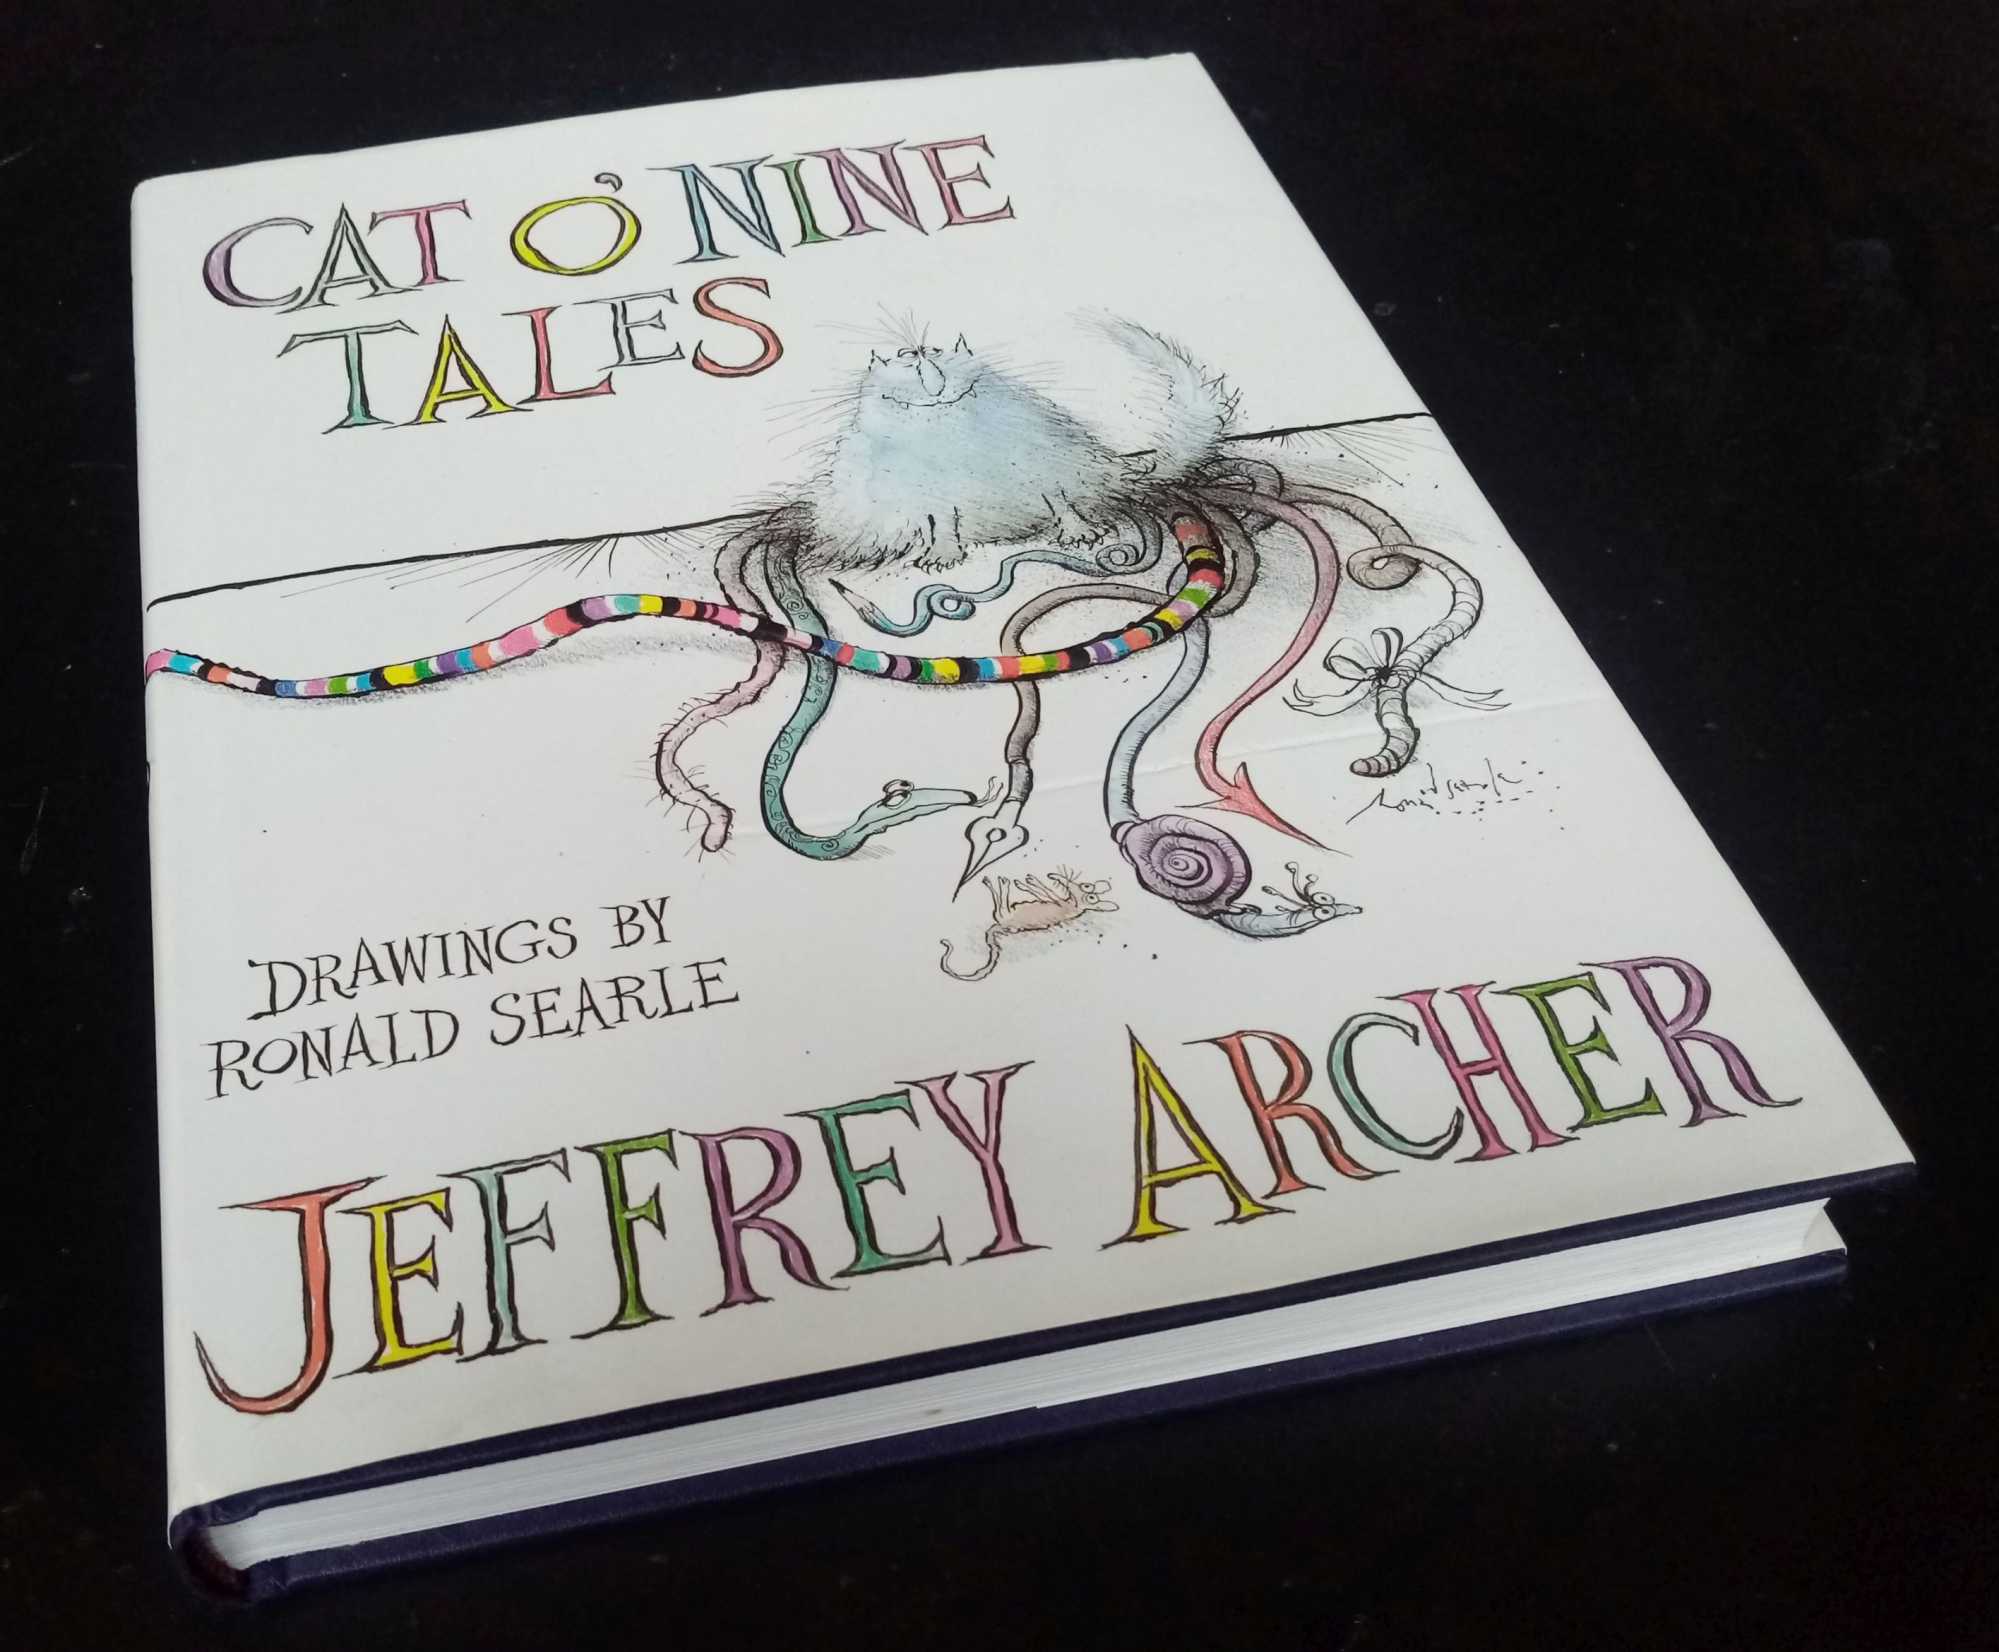 Jeffrey Archer - Cat O' Nine Tales  SIGNED